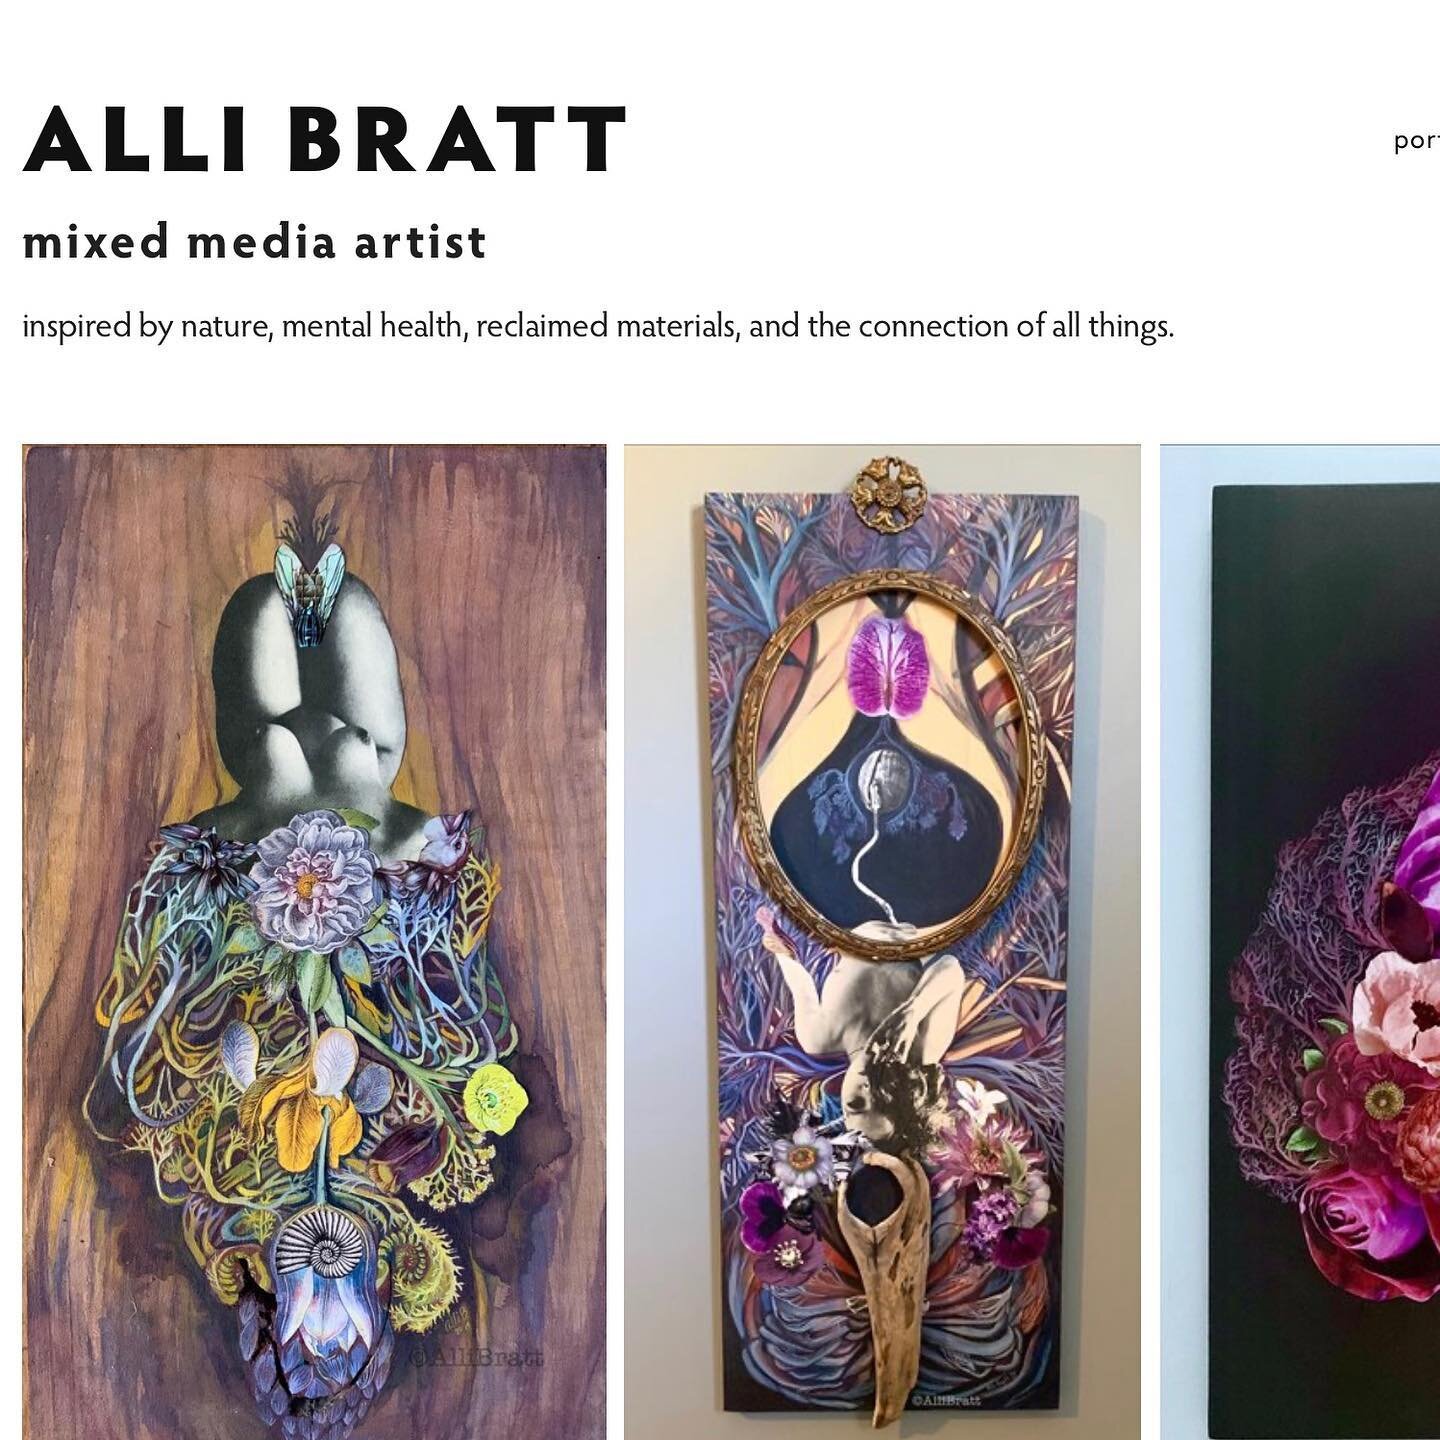 New website is live! Check it out. www.AlliBratt.com. Link in bio! Share with your friends and family 💜

#art #artist #mixedmediaart #mixedmediaartist #artistofinstagram #artofinstagram #allibratt #allibrattart #website #artistwebsite #originalart #